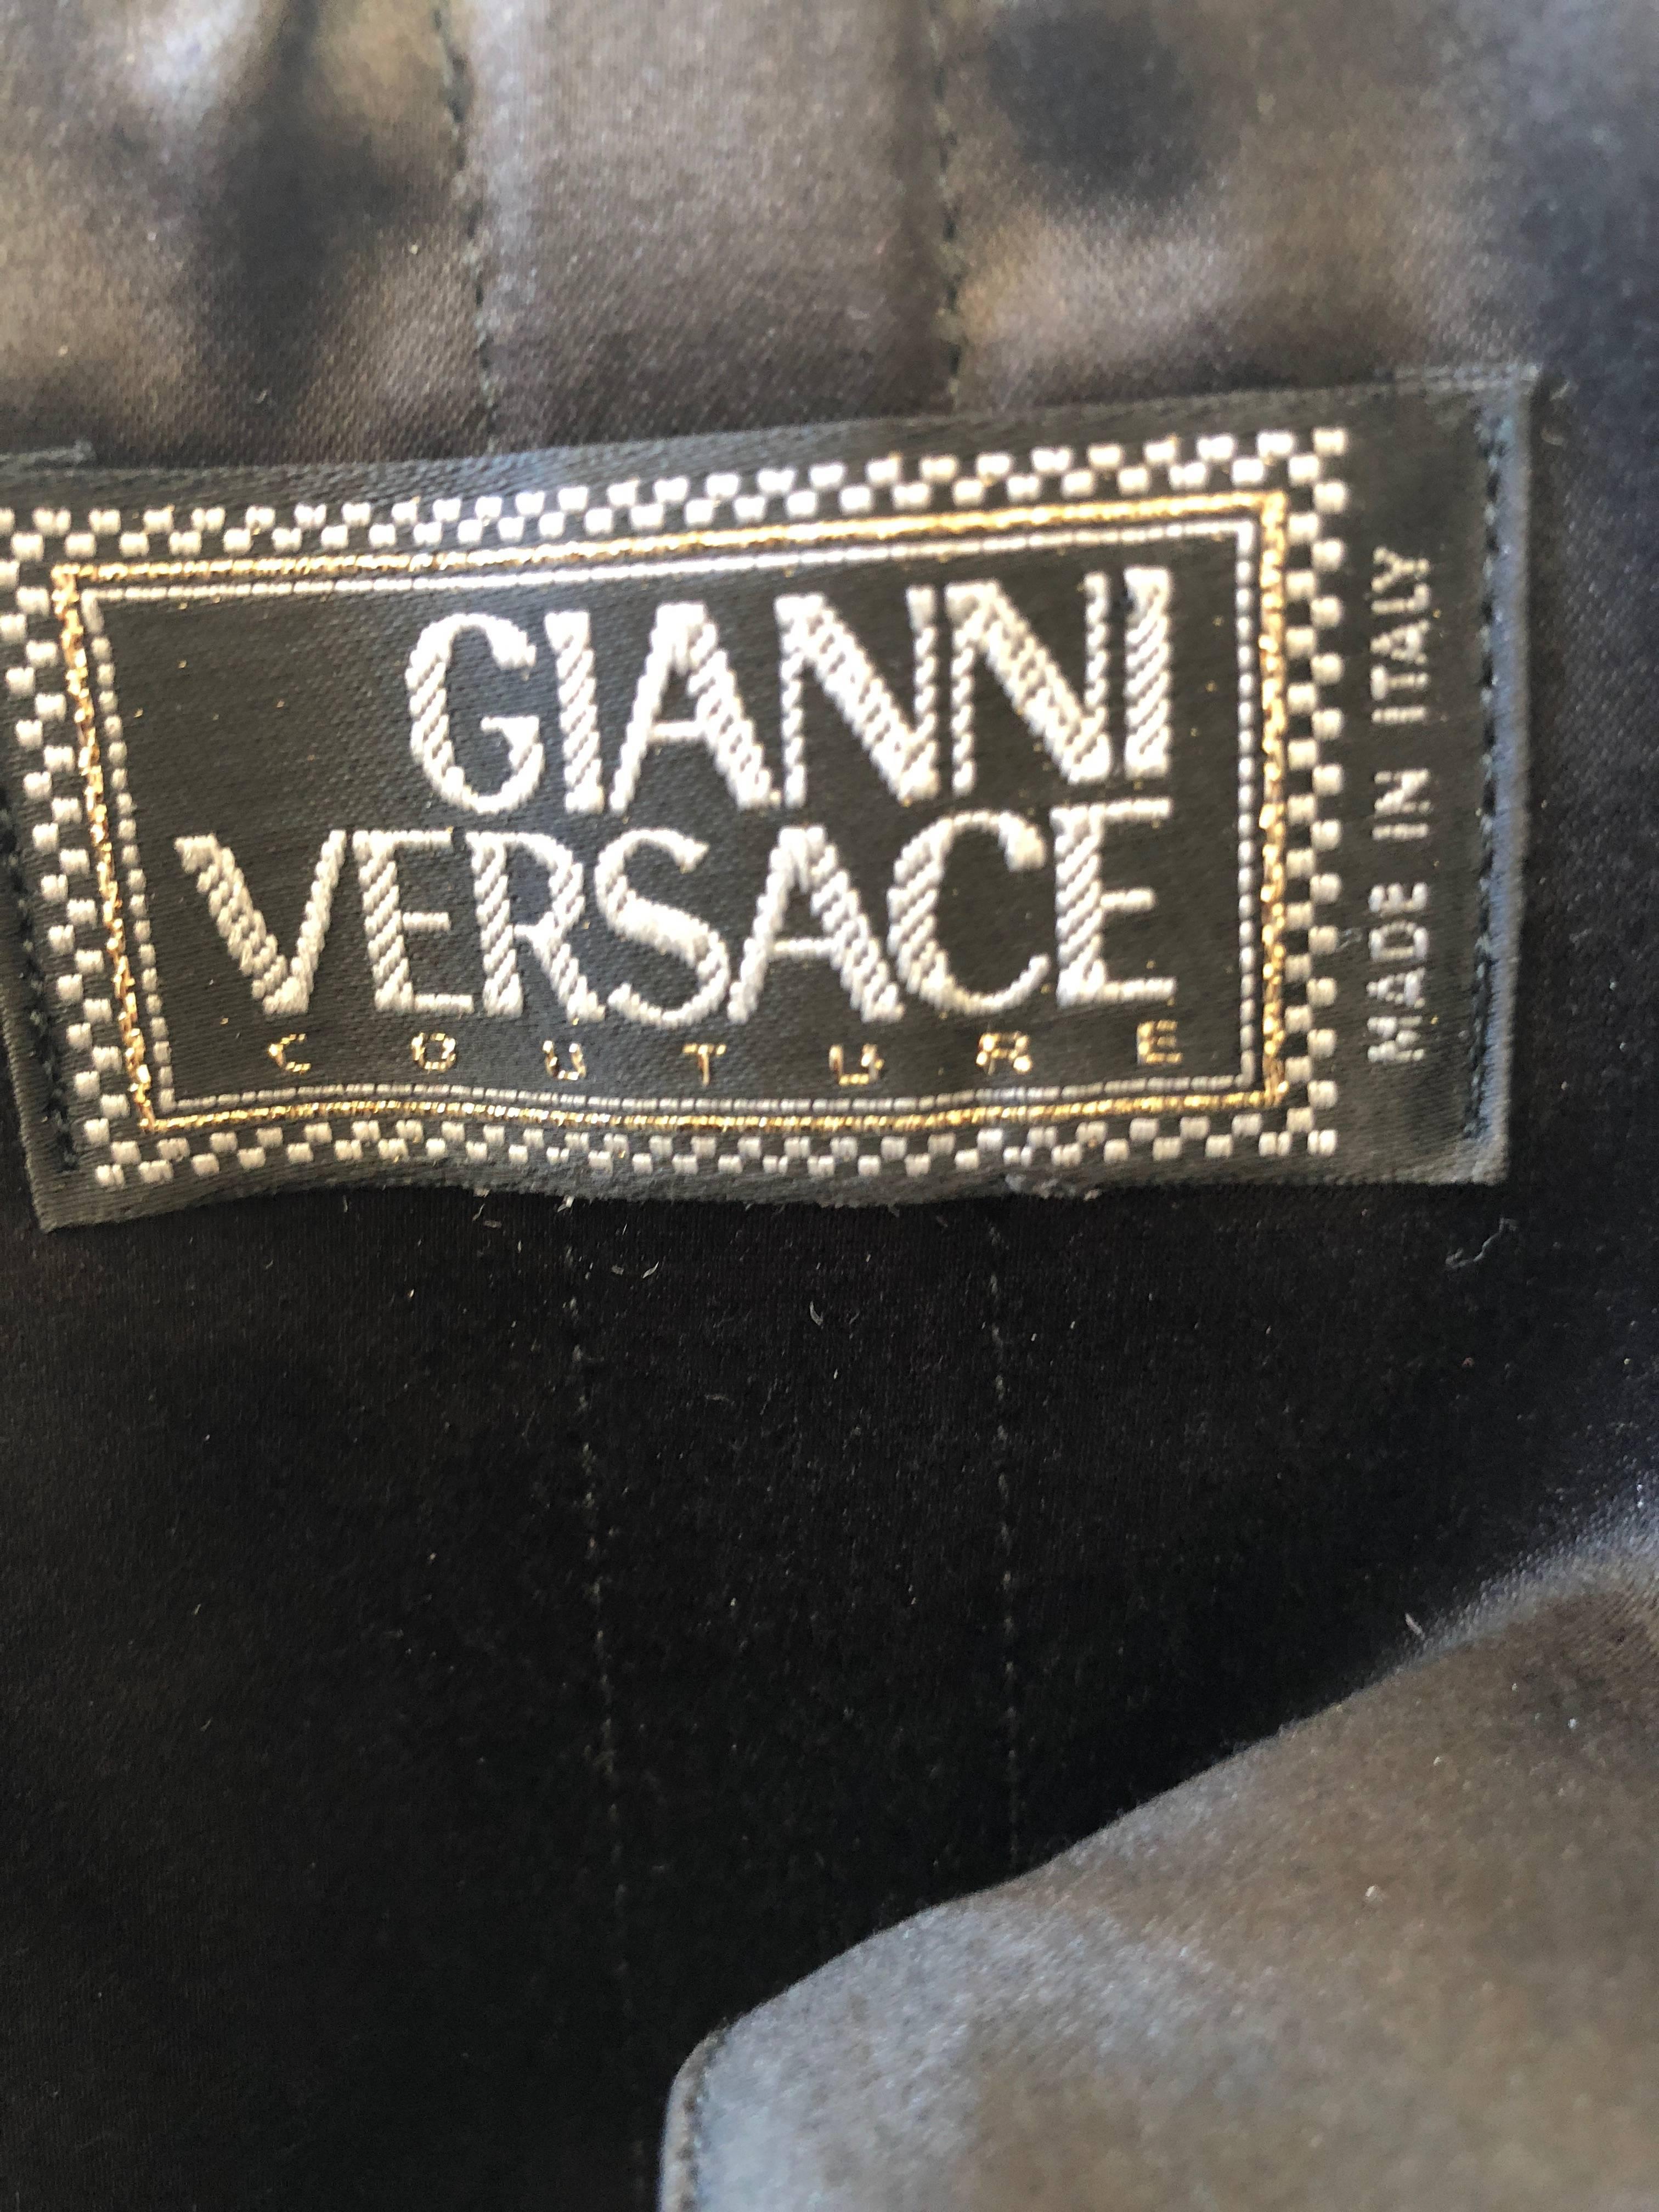 Gianni Versace Couture Vintage 1989 Textured Black Velvet  Evening Dress For Sale 4